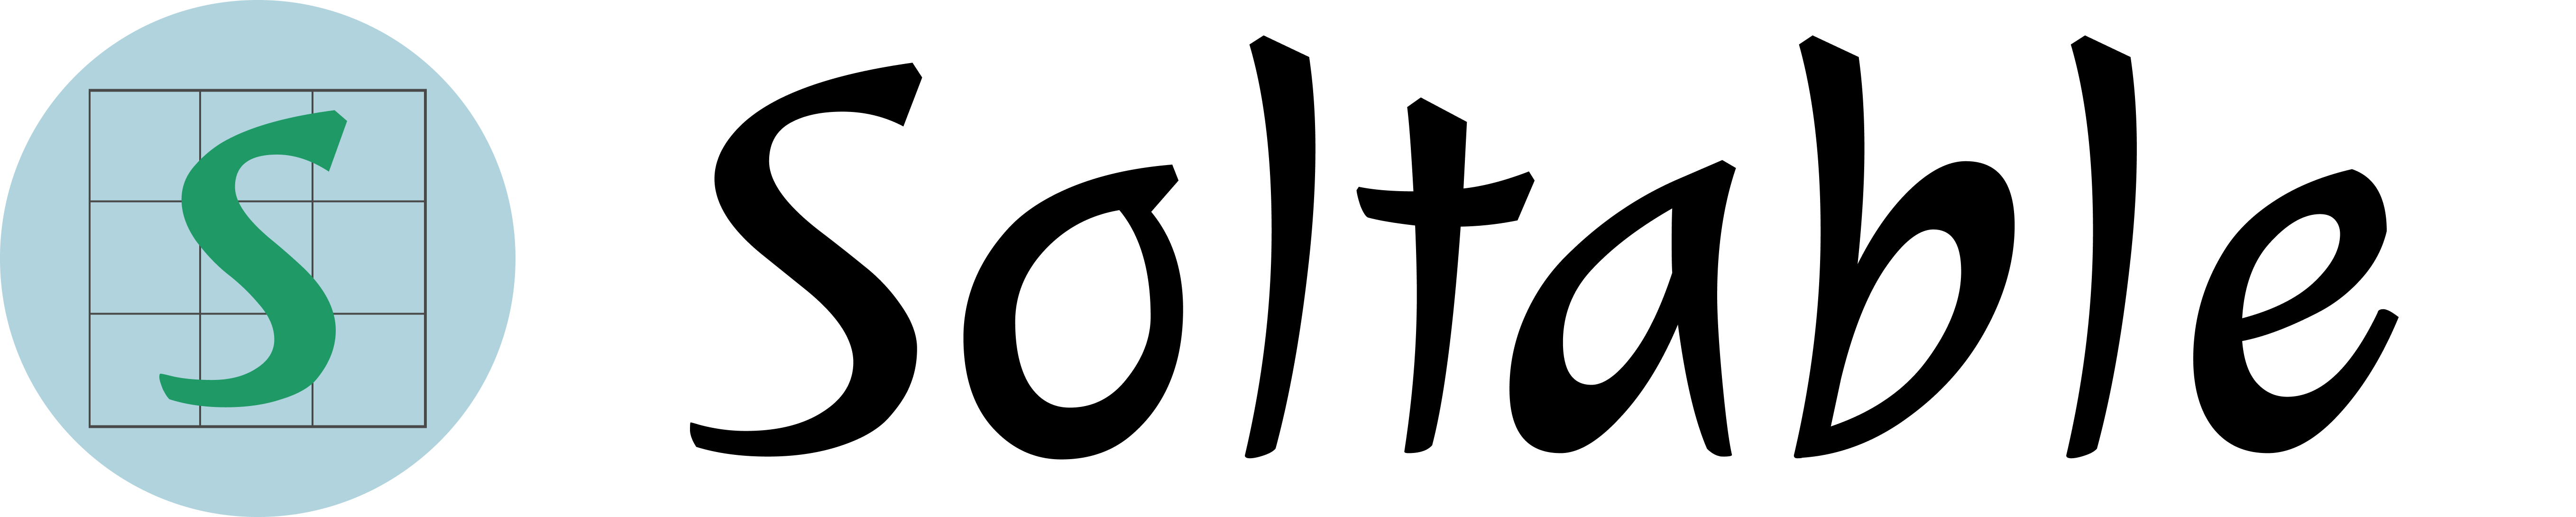 Tradeboard black logo